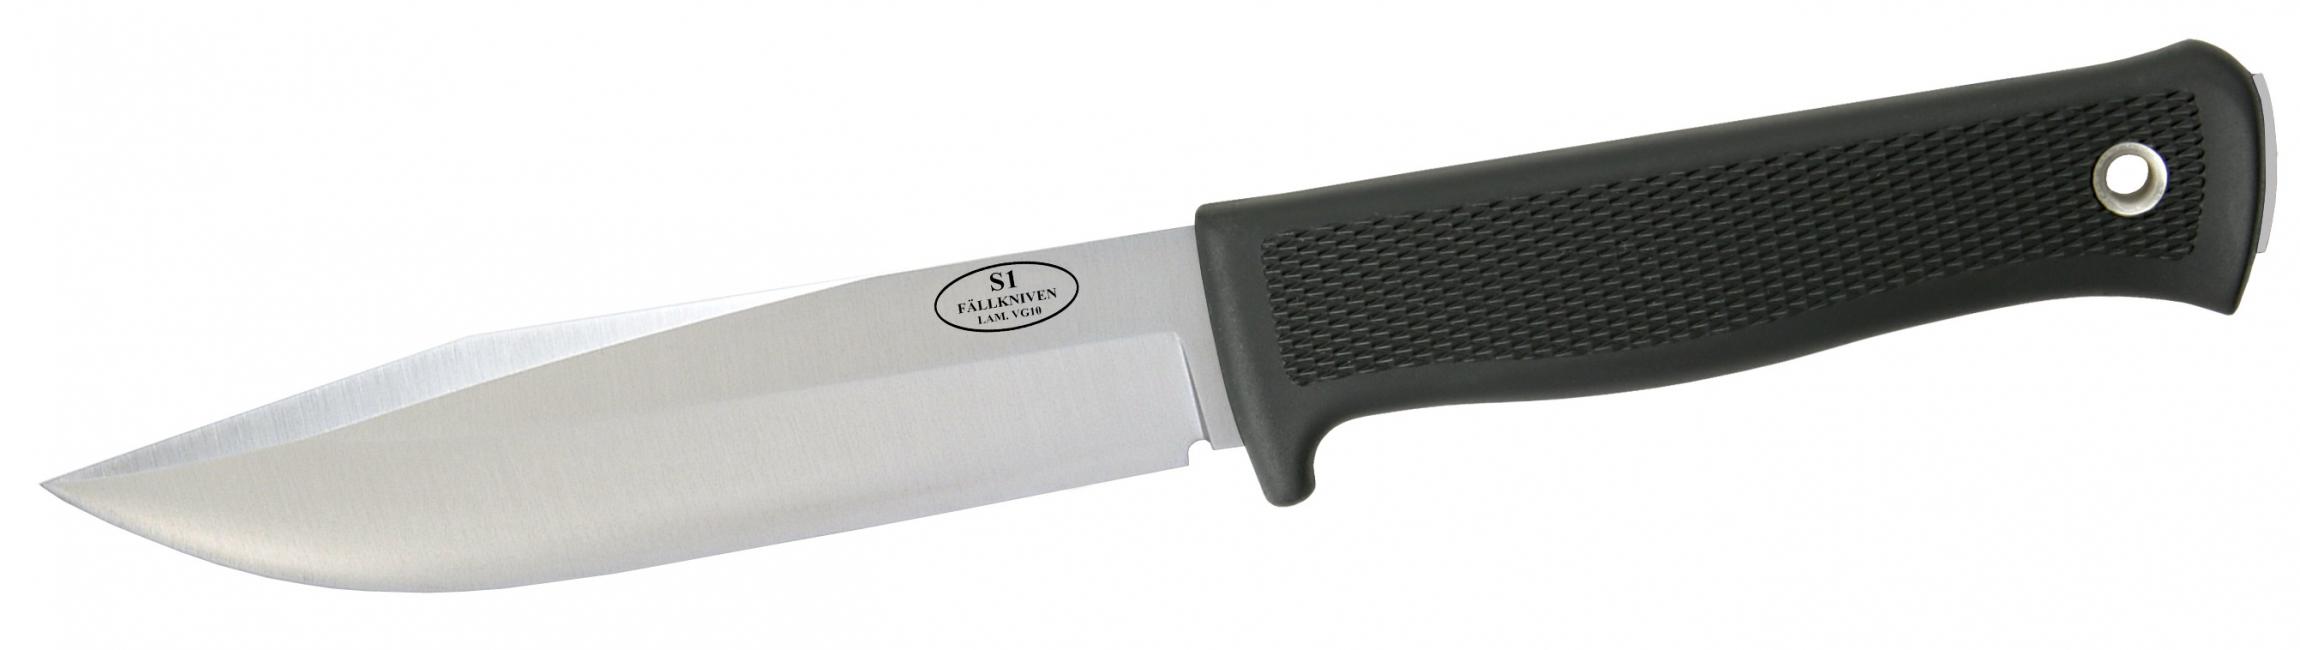 knife-fallkniven-s1.jpg